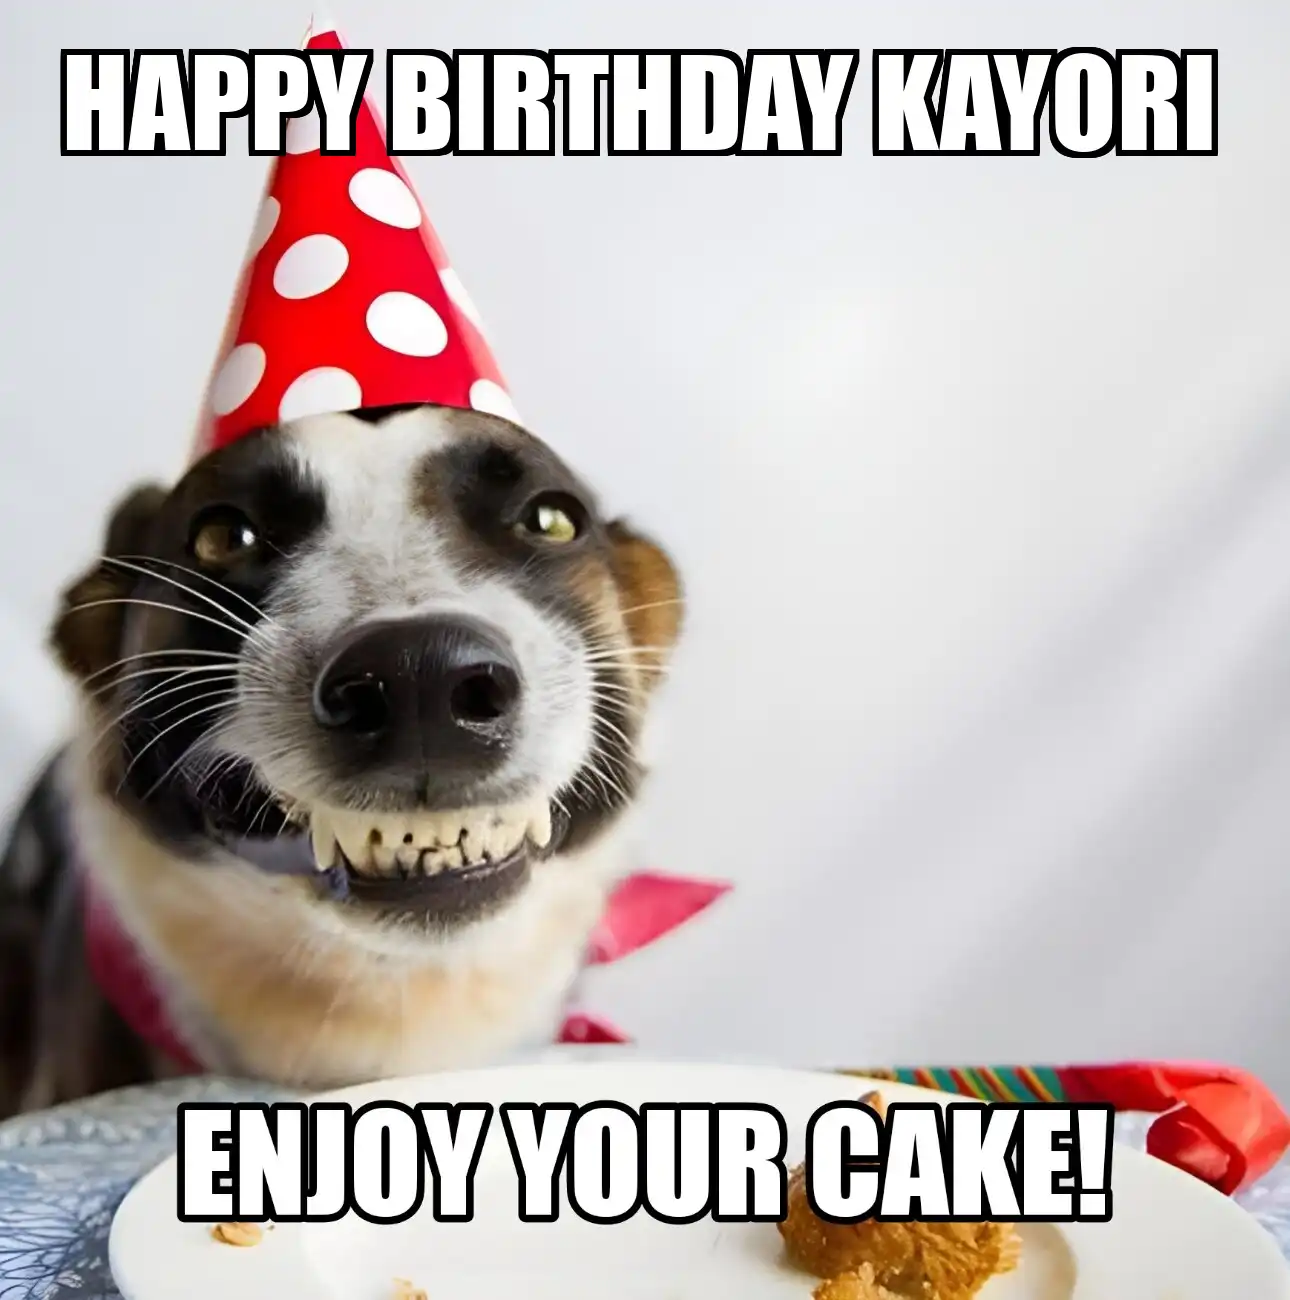 Happy Birthday Kayori Enjoy Your Cake Dog Meme